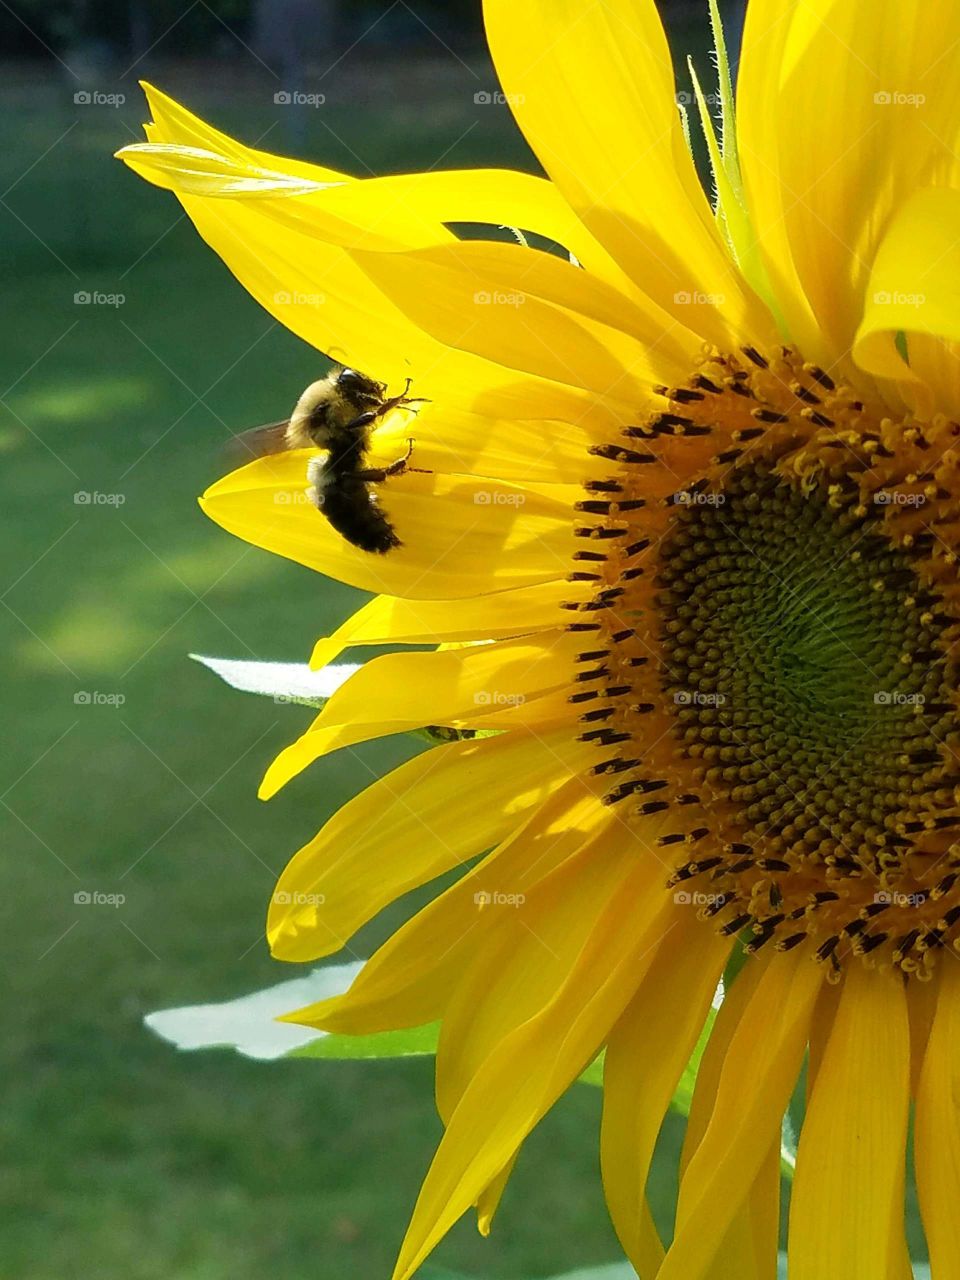 Sunflower in sunshine, bumblebee on petal, green grass in background.